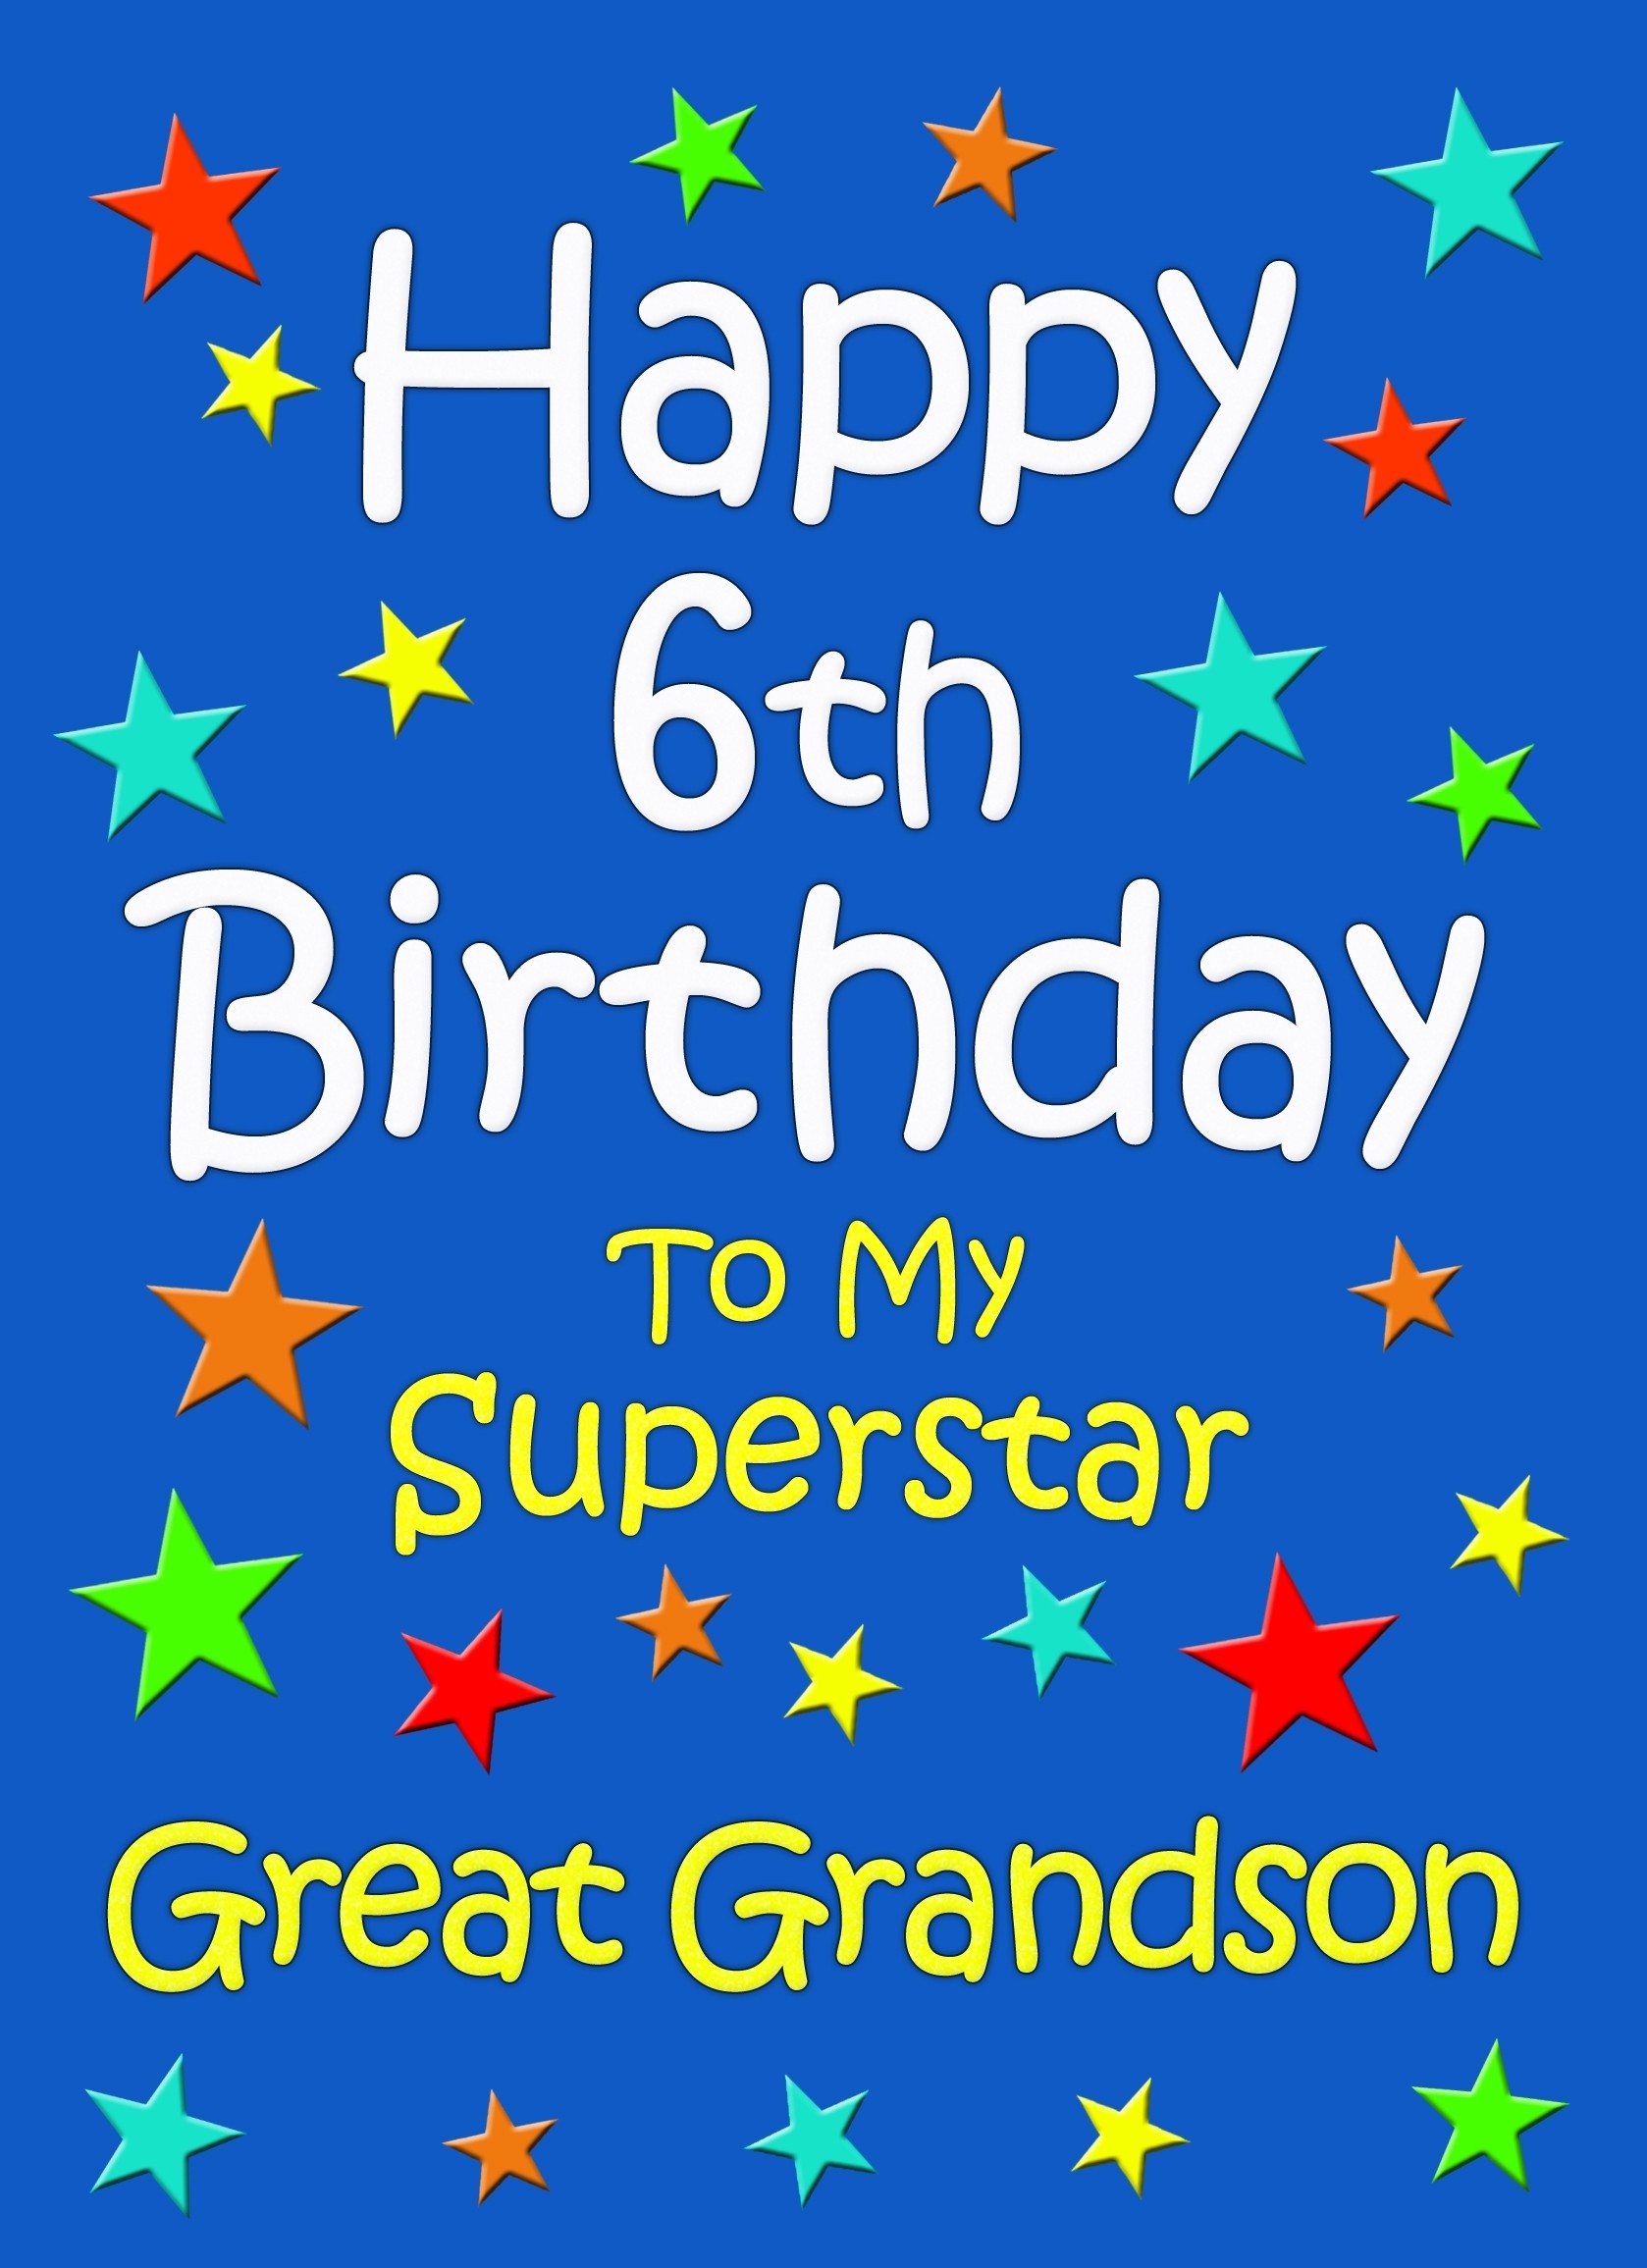 Great Grandson 6th Birthday Card (Blue)